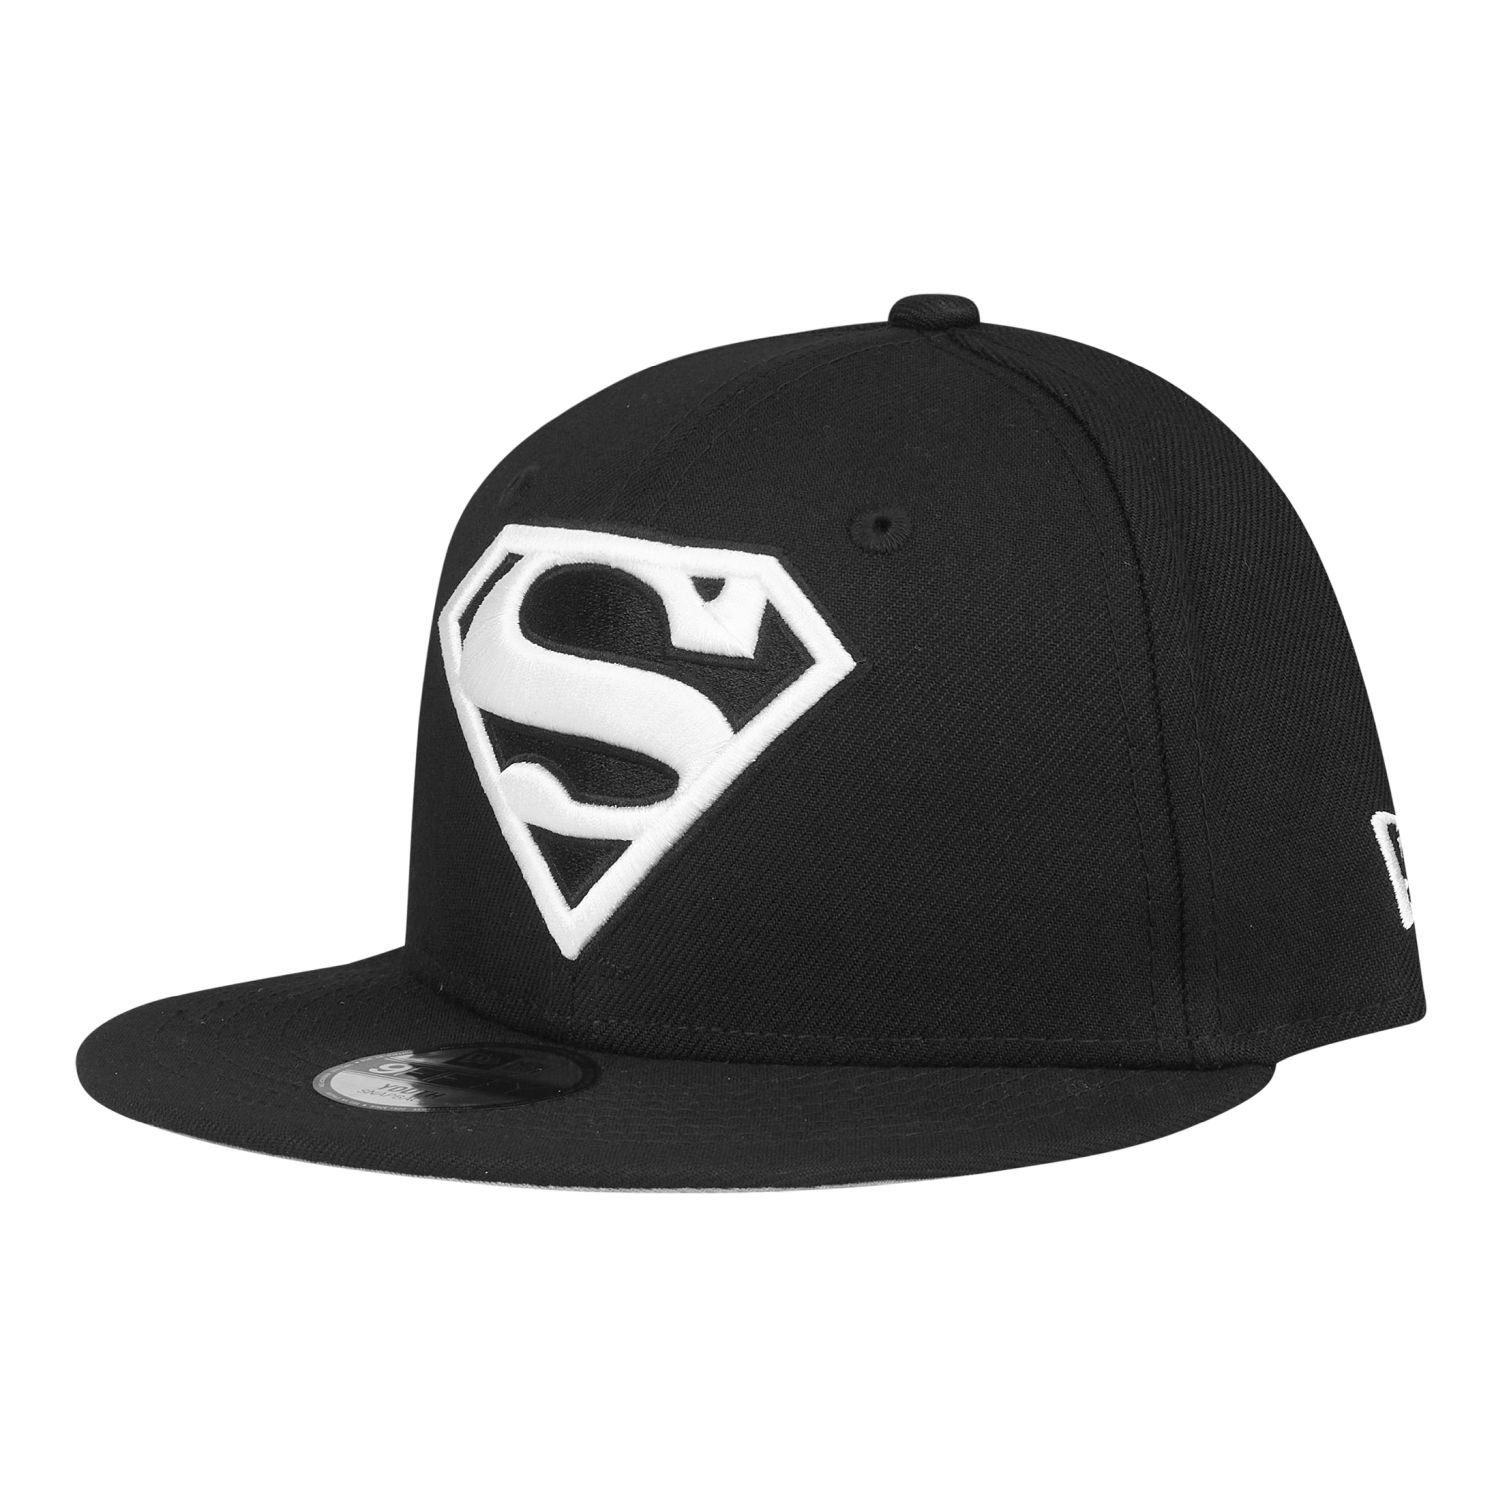 New Era Baseball Cap 9Fifty Superman